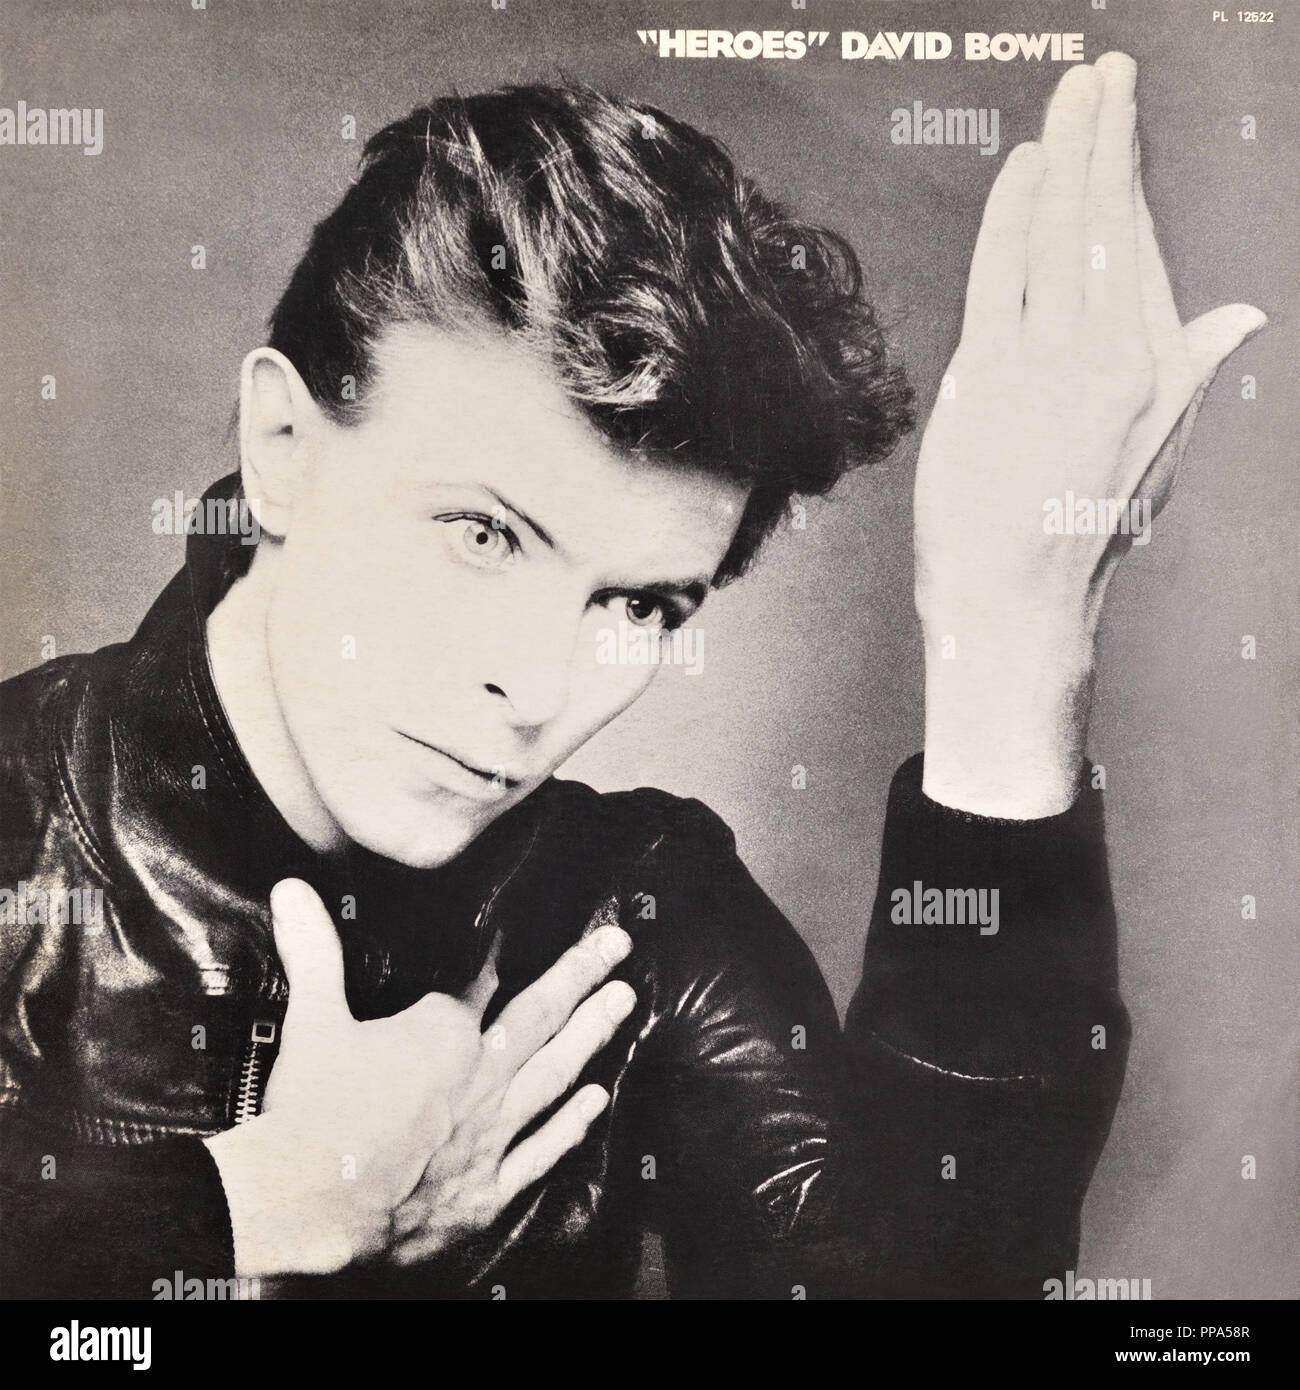 David Bowie - original Vinyl Album Cover - Heroes - 1977 Stockfoto